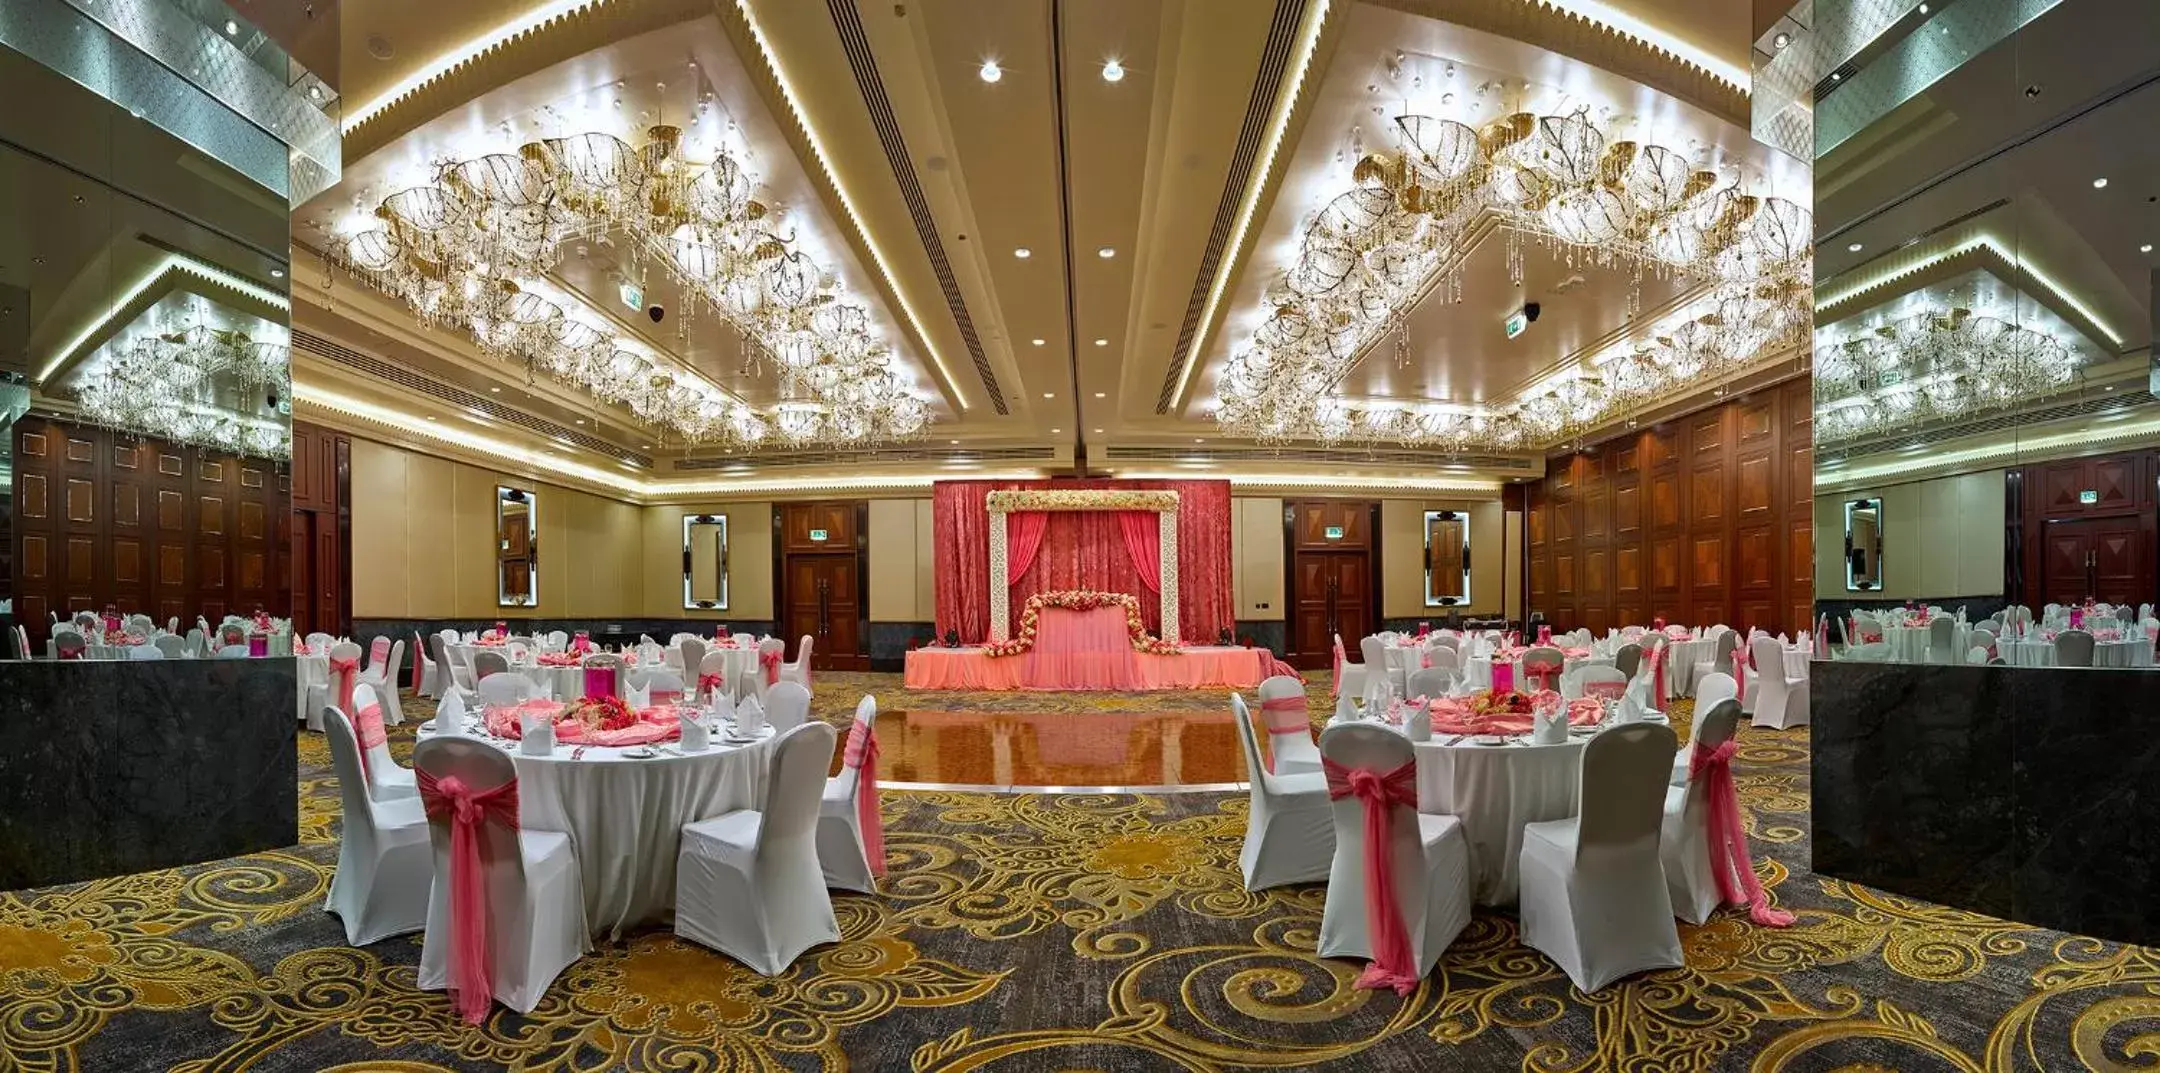 Banquet/Function facilities, Banquet Facilities in Millennium Airport Hotel Dubai